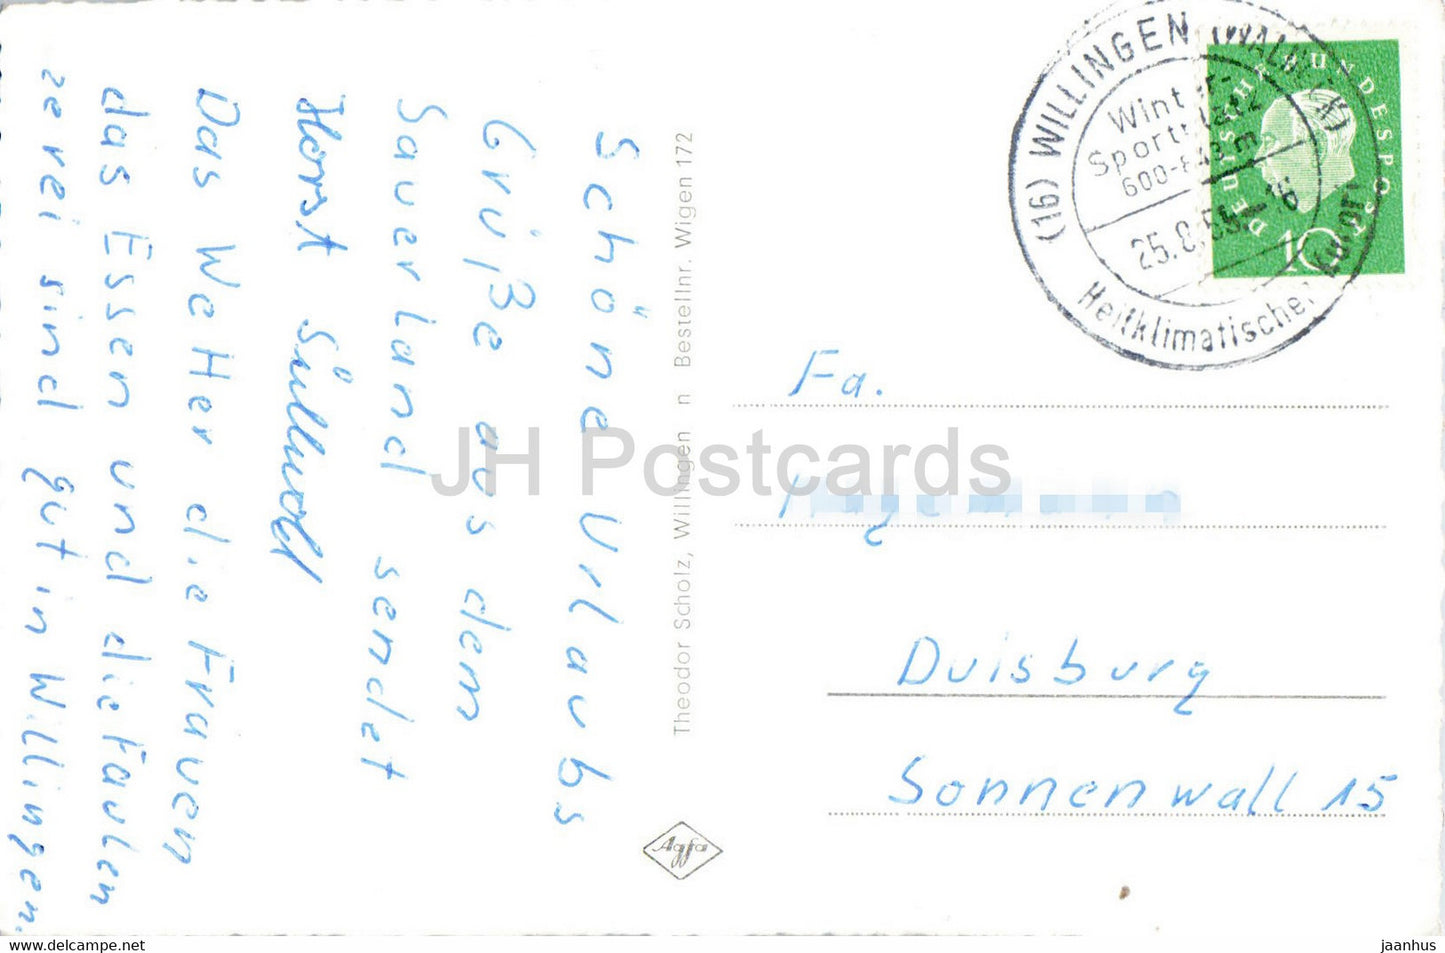 Willingen - Waldeck - Hermeketal - Hoppecketal - animaux - cerf - carte postale ancienne - 1959 - Allemagne - utilisé